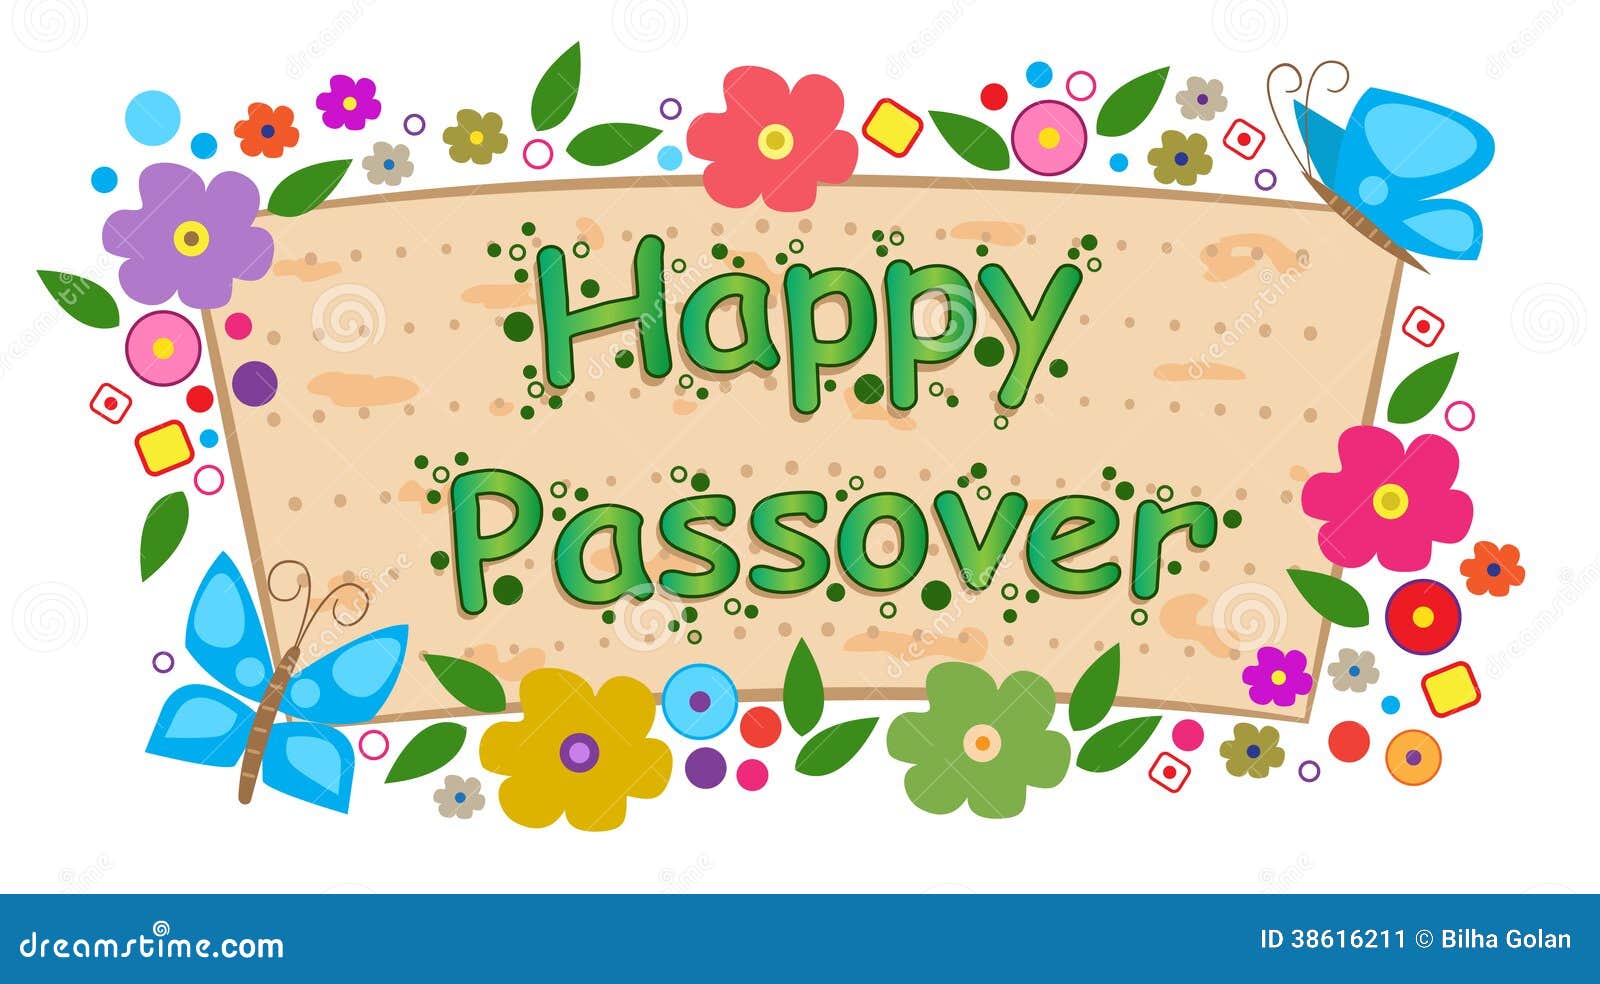 happy passover clipart - photo #2